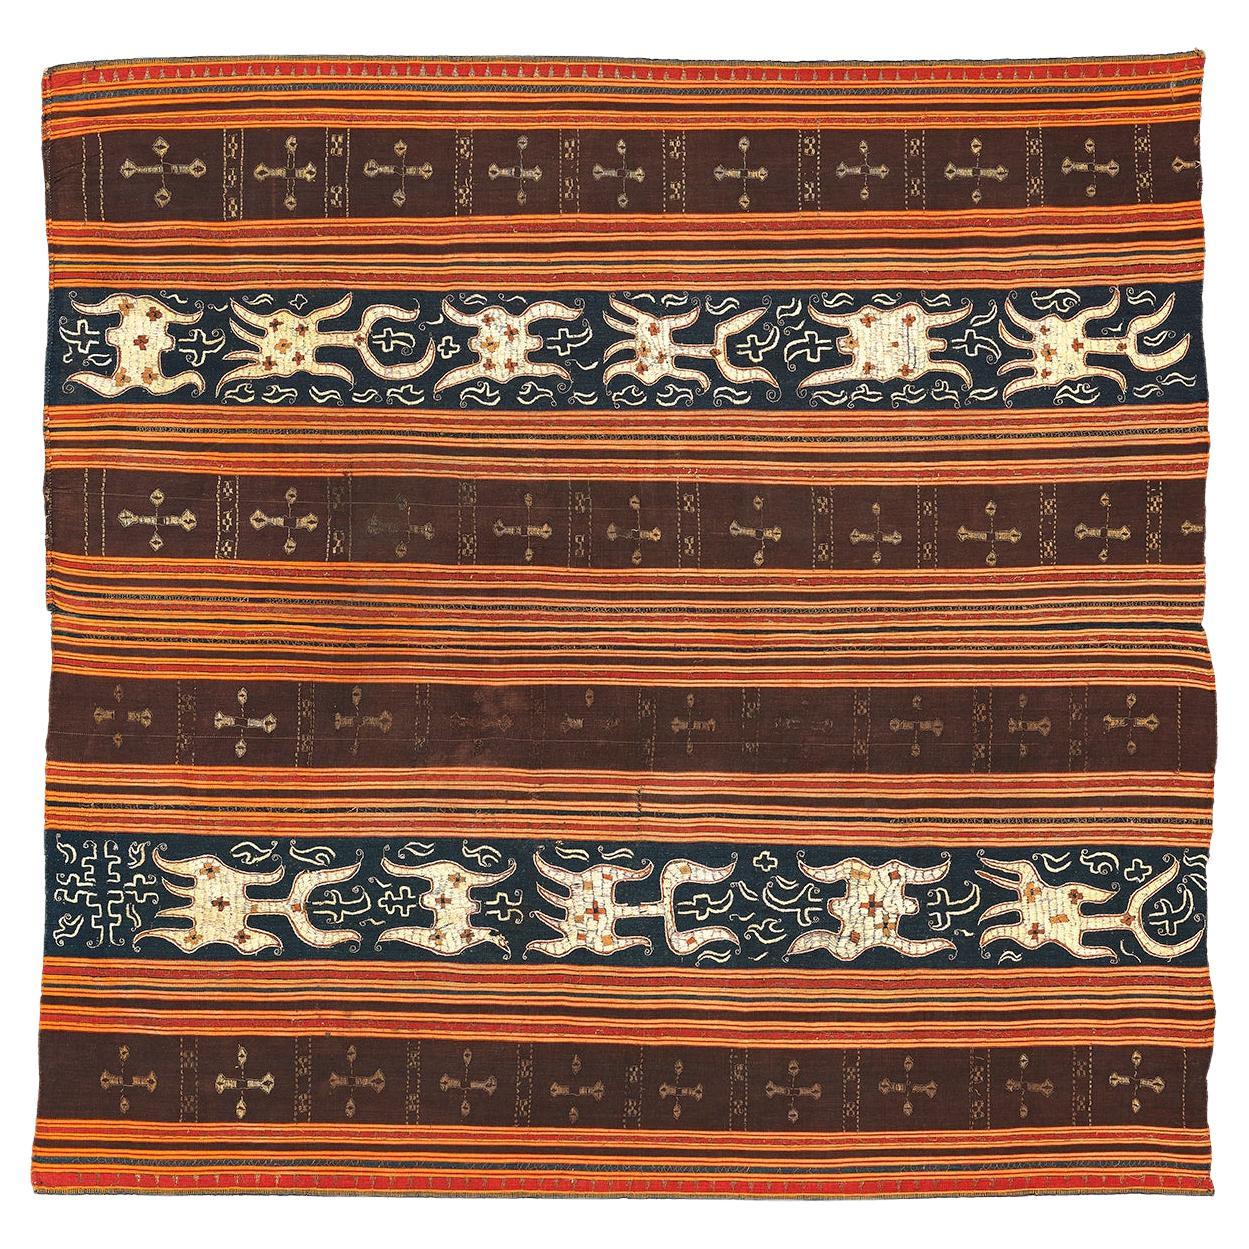 Antikes Indonesisches zeremonielles Textil, Lampung-Volkes, Sumatra